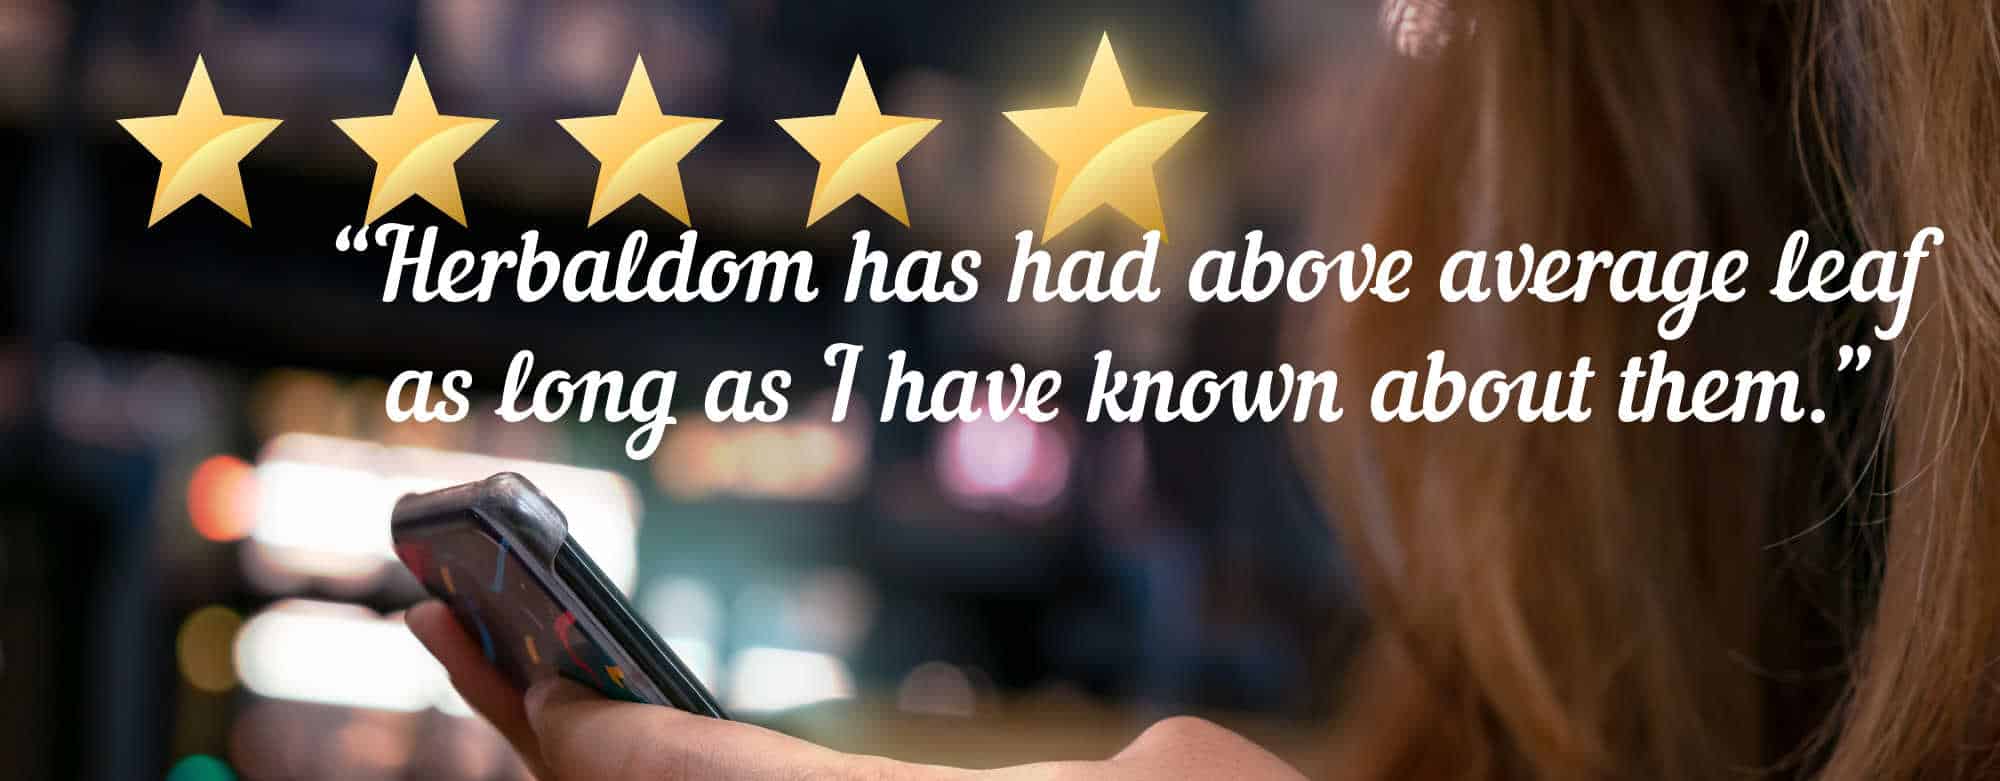 image of herbaldom customer reviews